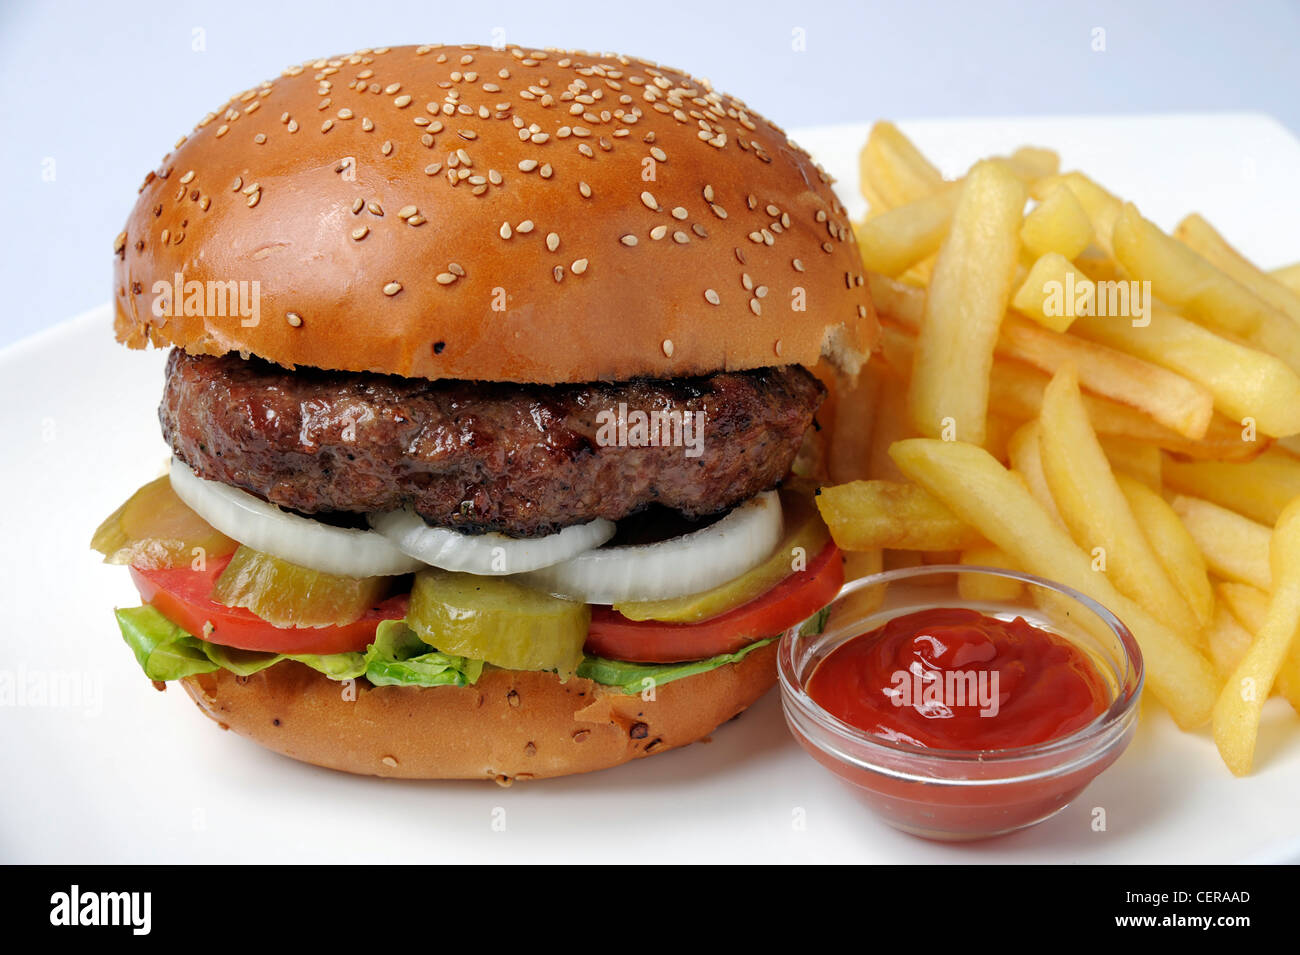 Hamburger with french fries and ketchup Stock Photo